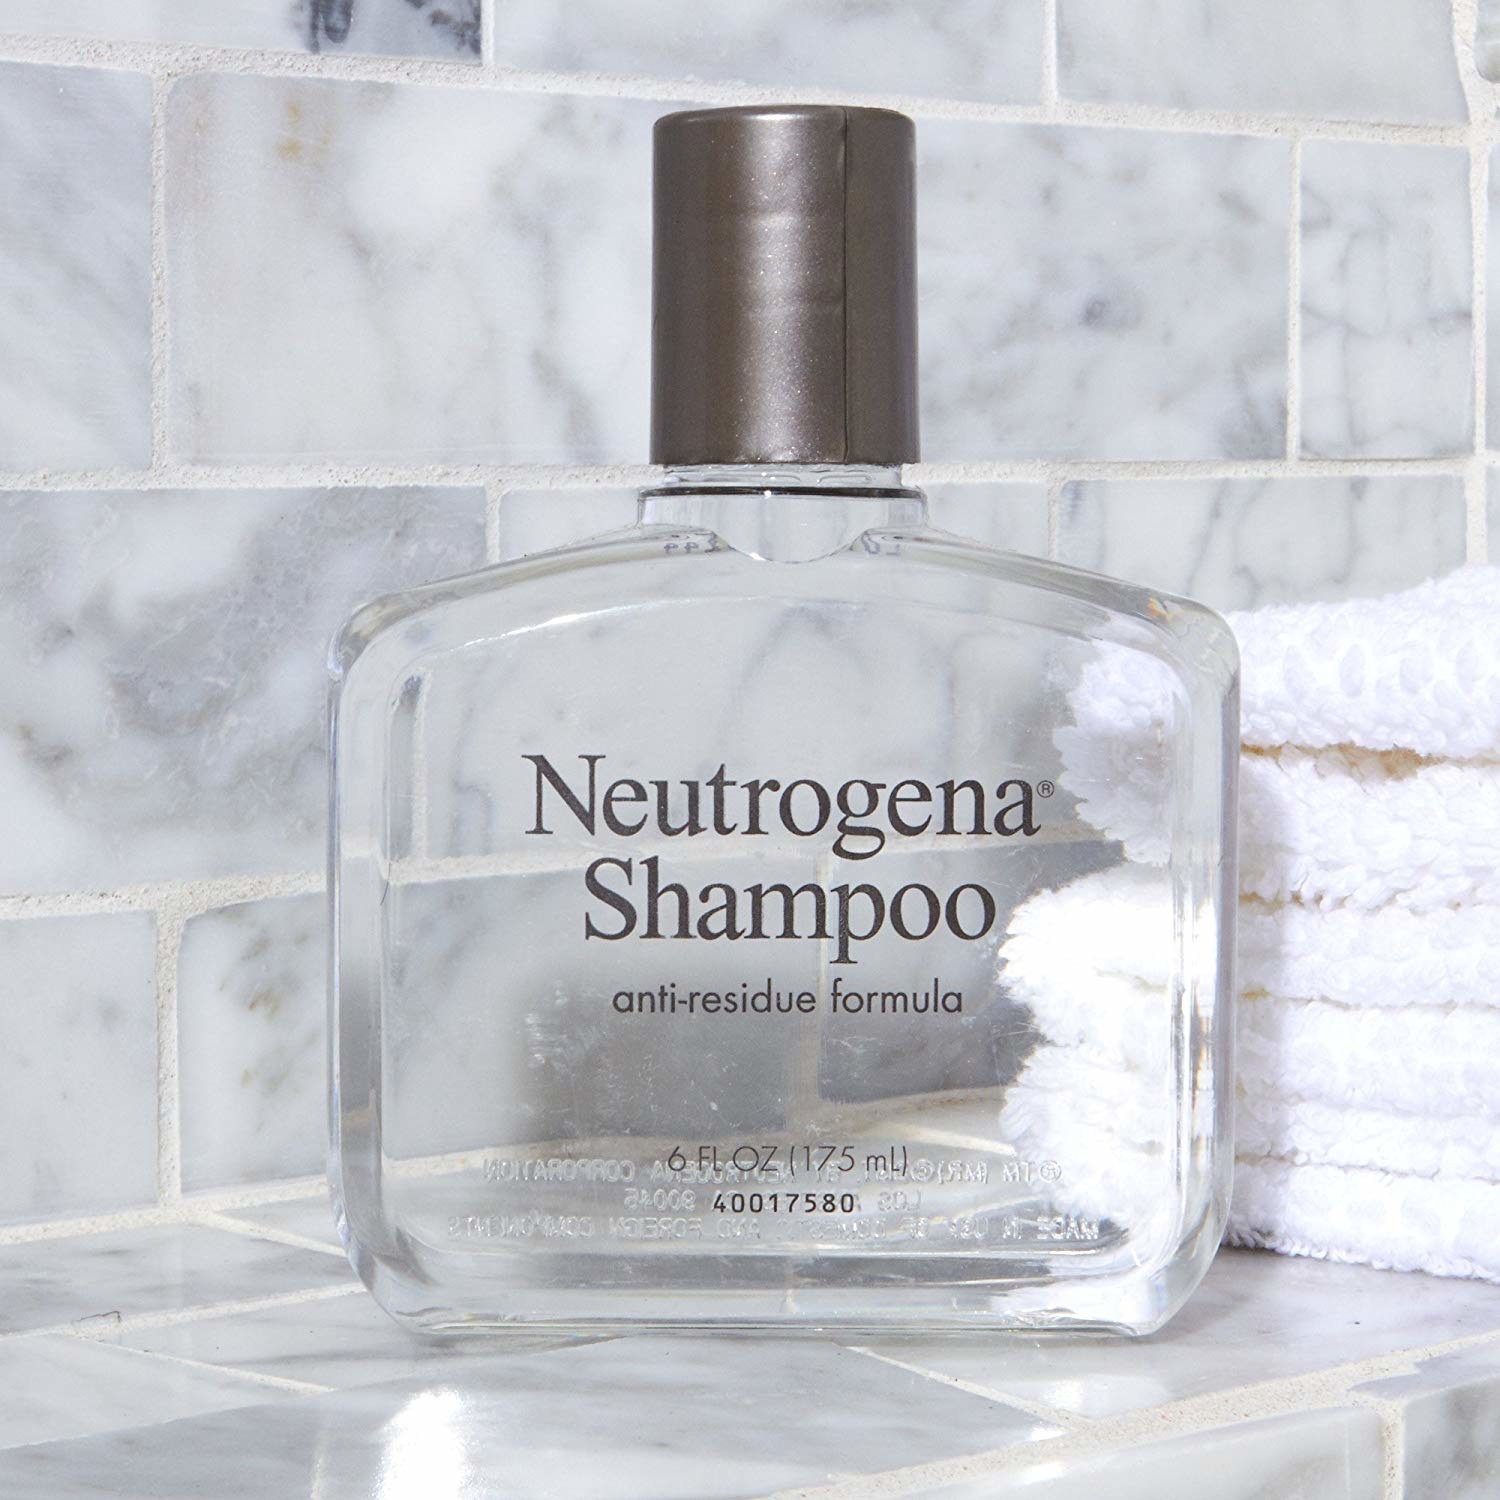 the clear shampoo sitting on a shower ledge